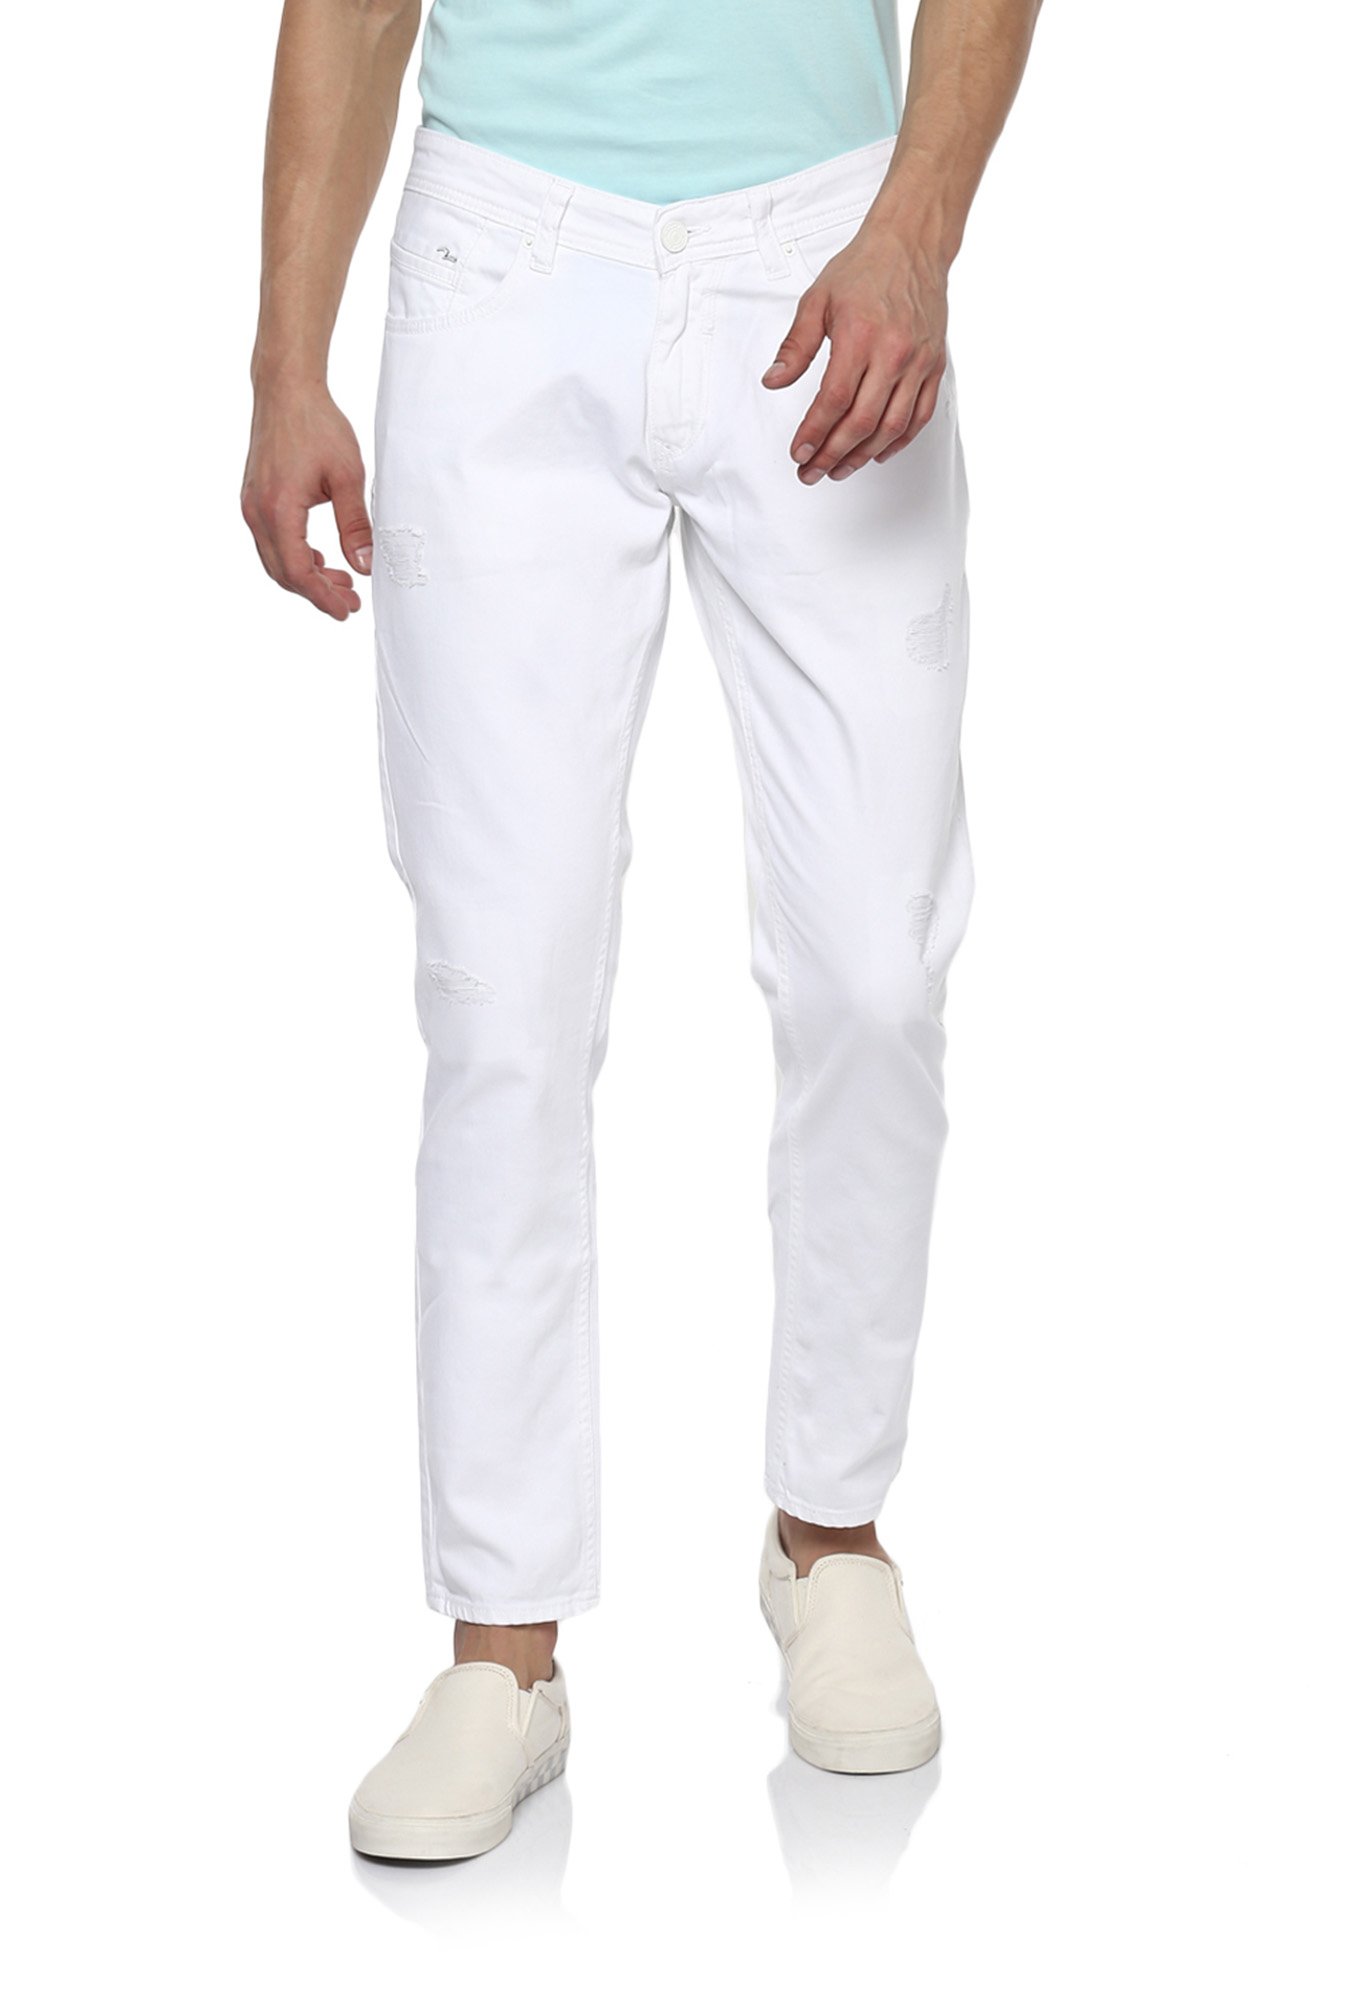 Plain Mens White Slim Fit Denim Jeans Waist Size 28 to 42